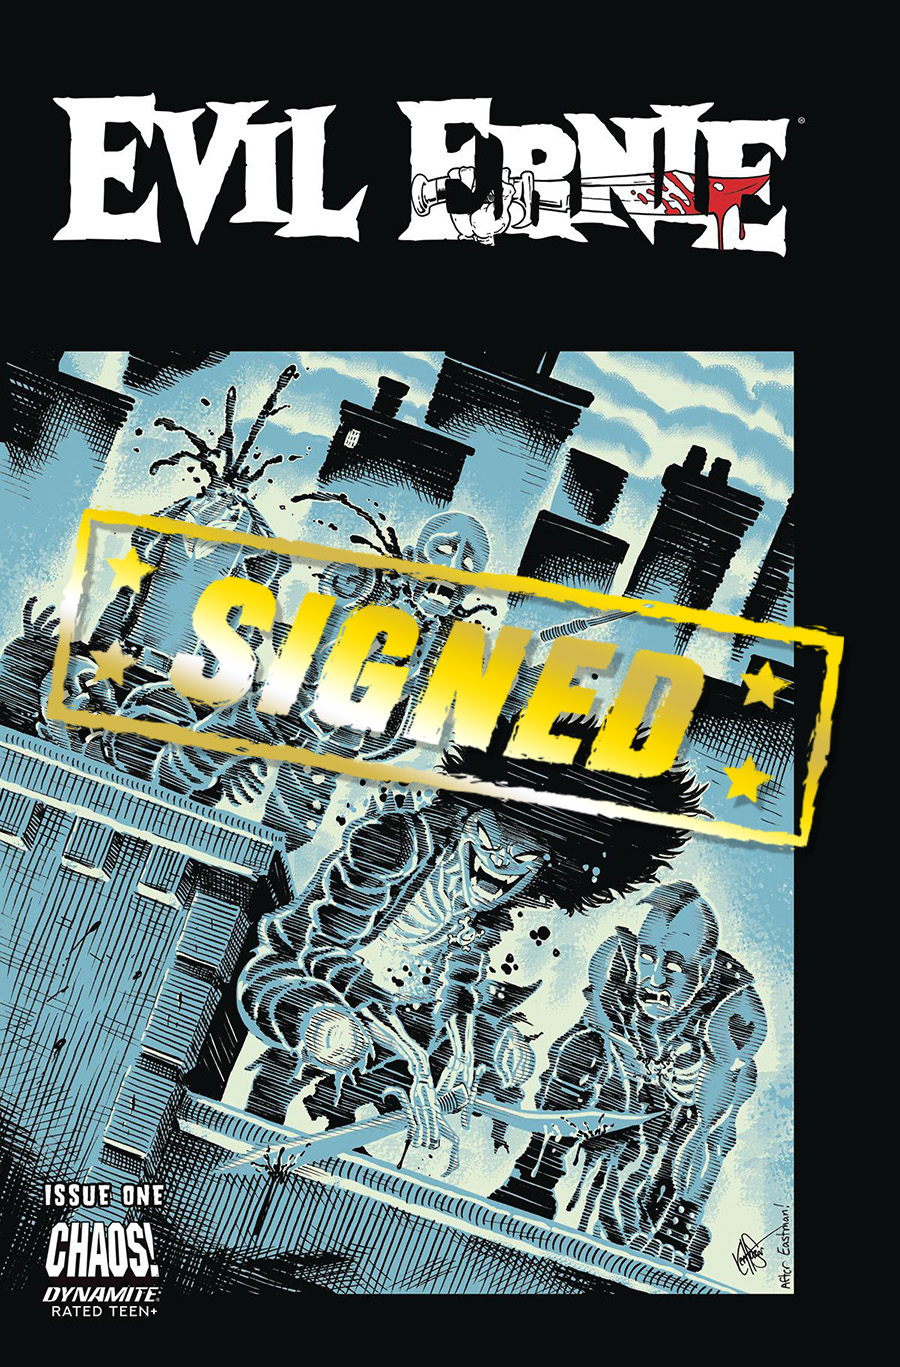 Evil Ernie Vol 5 #1 Cover Q DF Limited Edition Ken Haeser TMNT Homage Variant Cover Signed & Remarked By Ken Haeser